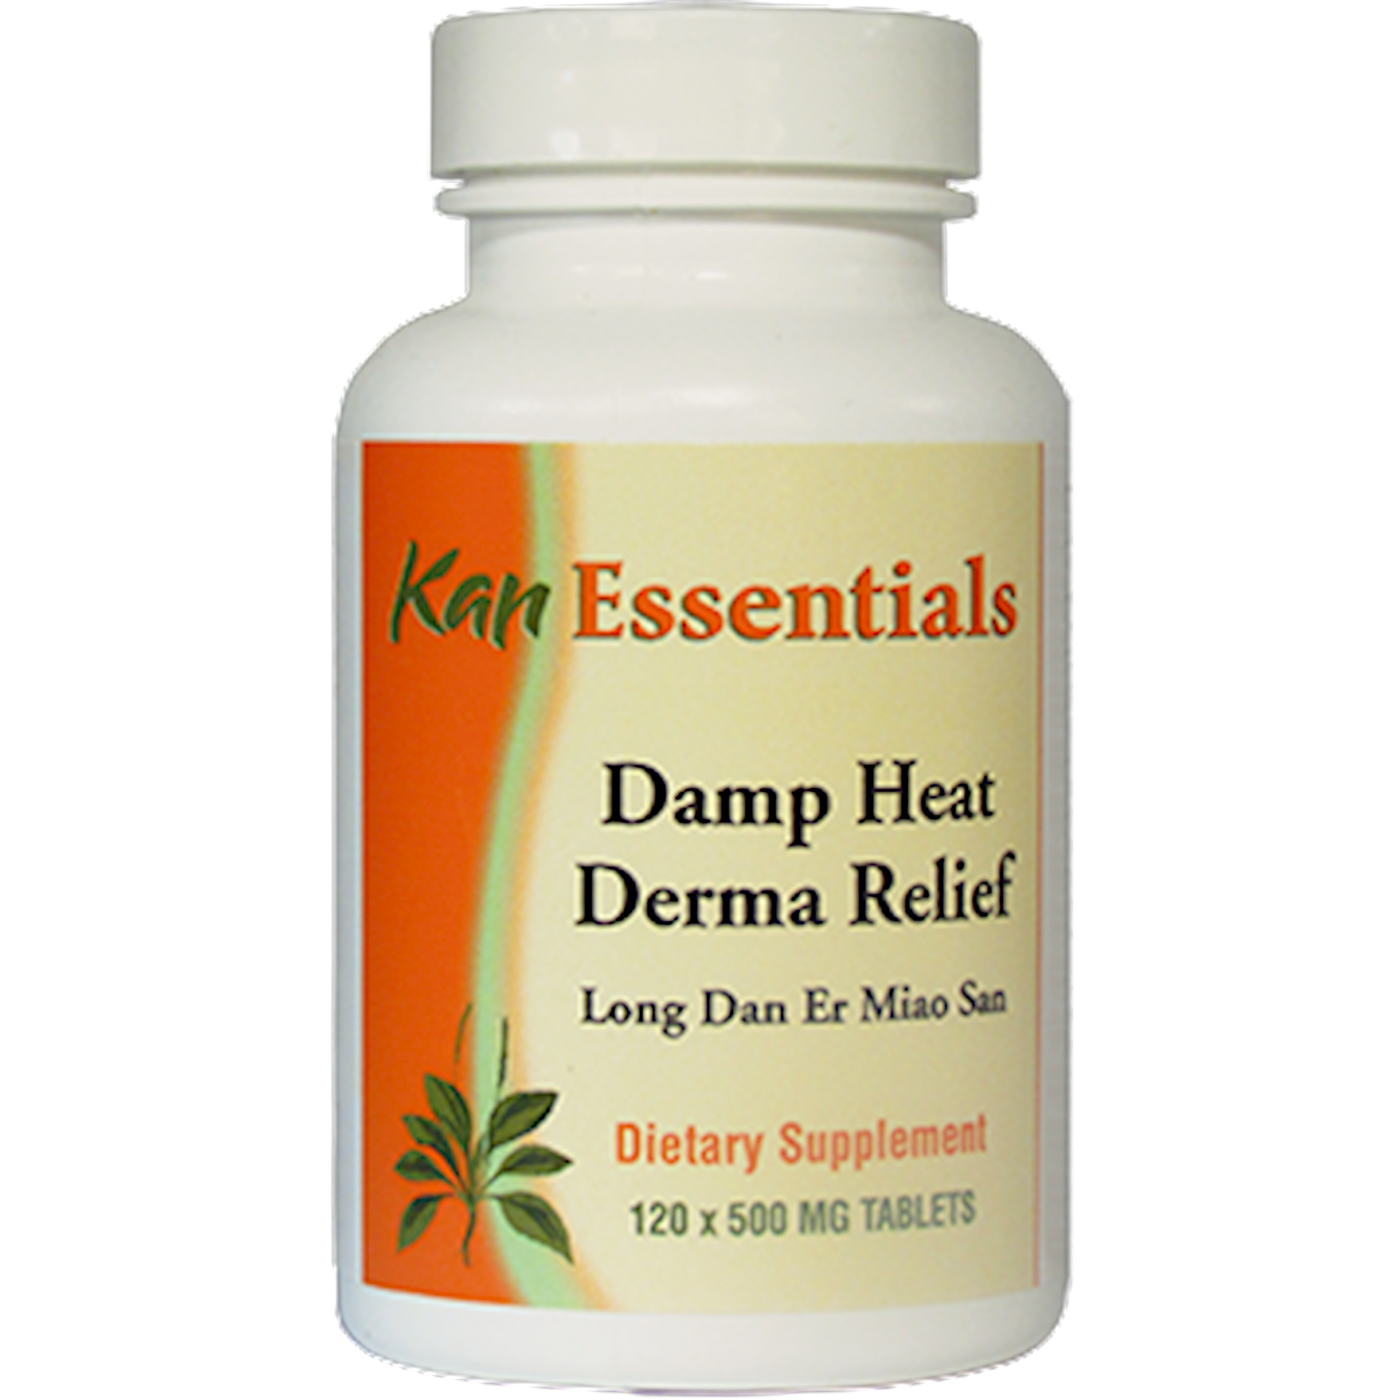 Damp Heat Derma Relief  Curated Wellness